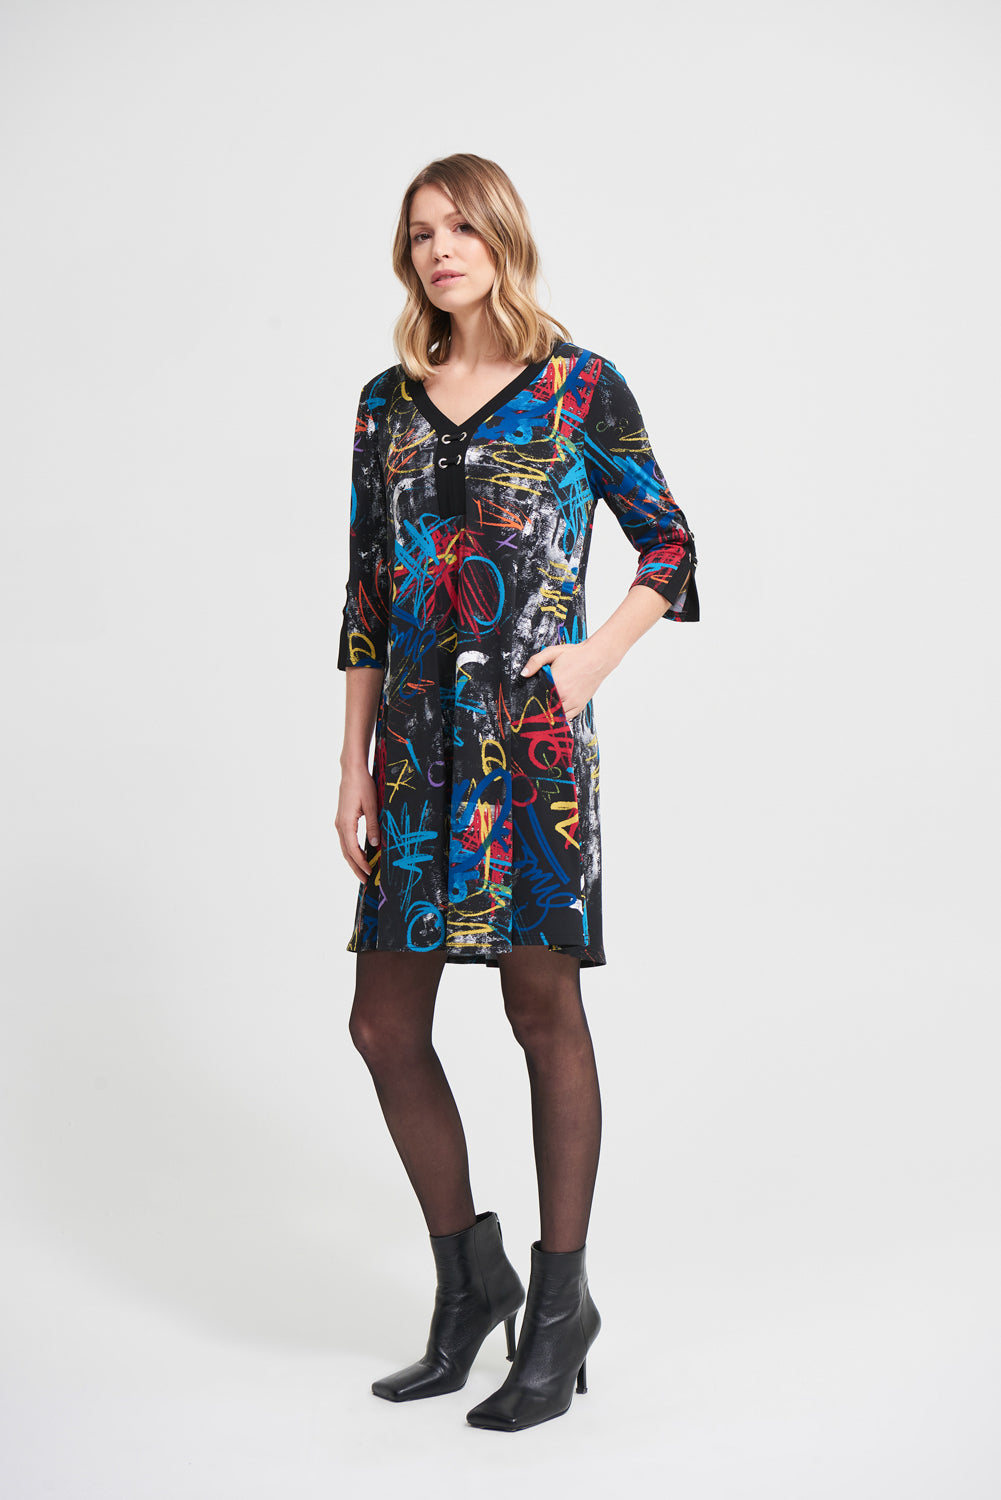 Joseph Ribkoff Black-Multi A-Line Dress Style 213677